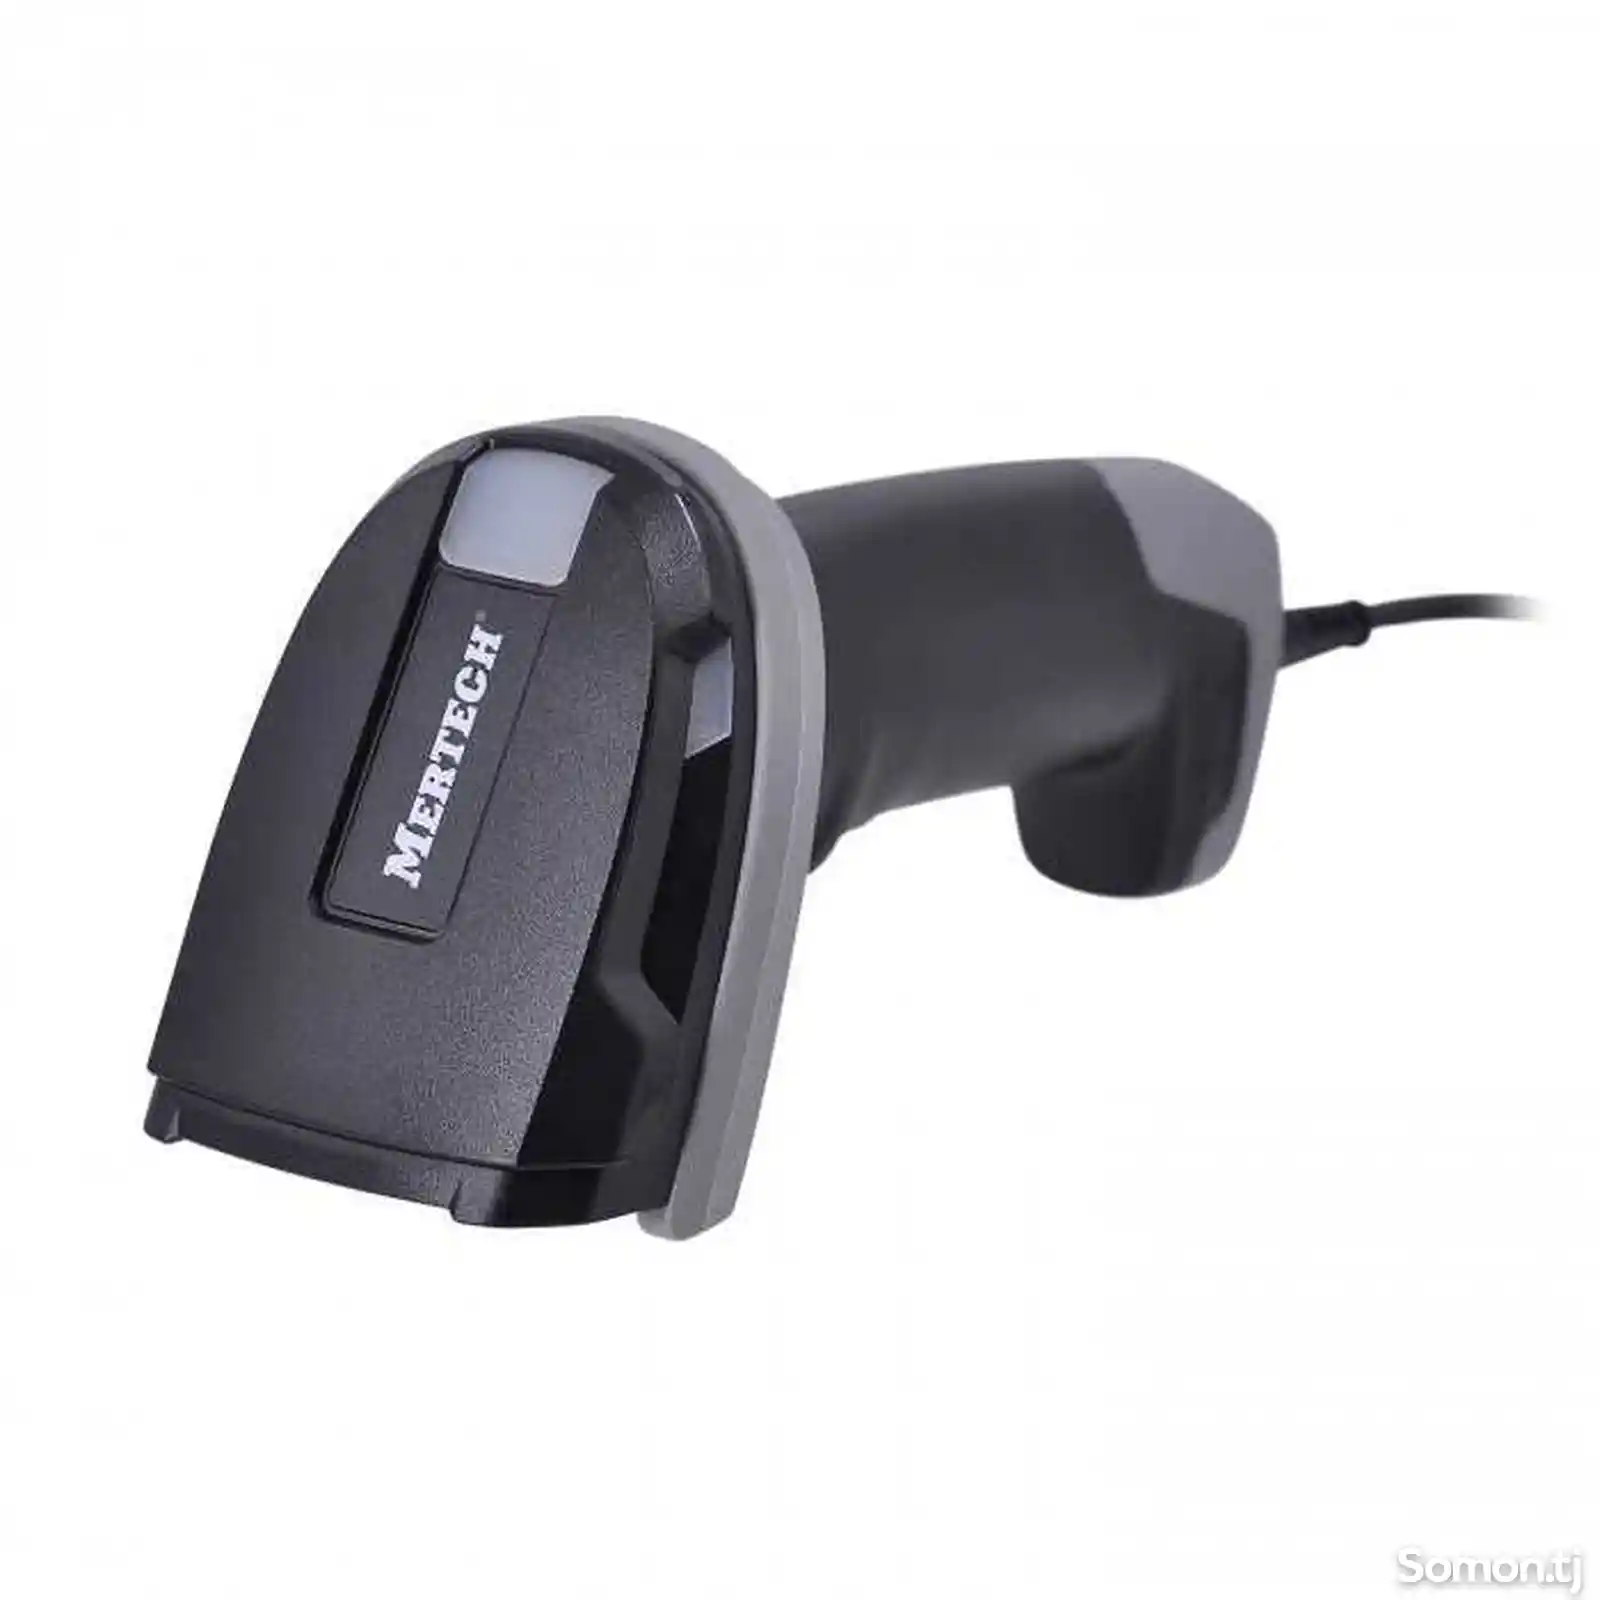 Сканер Mertech 2410 P2D Superlead USB-2